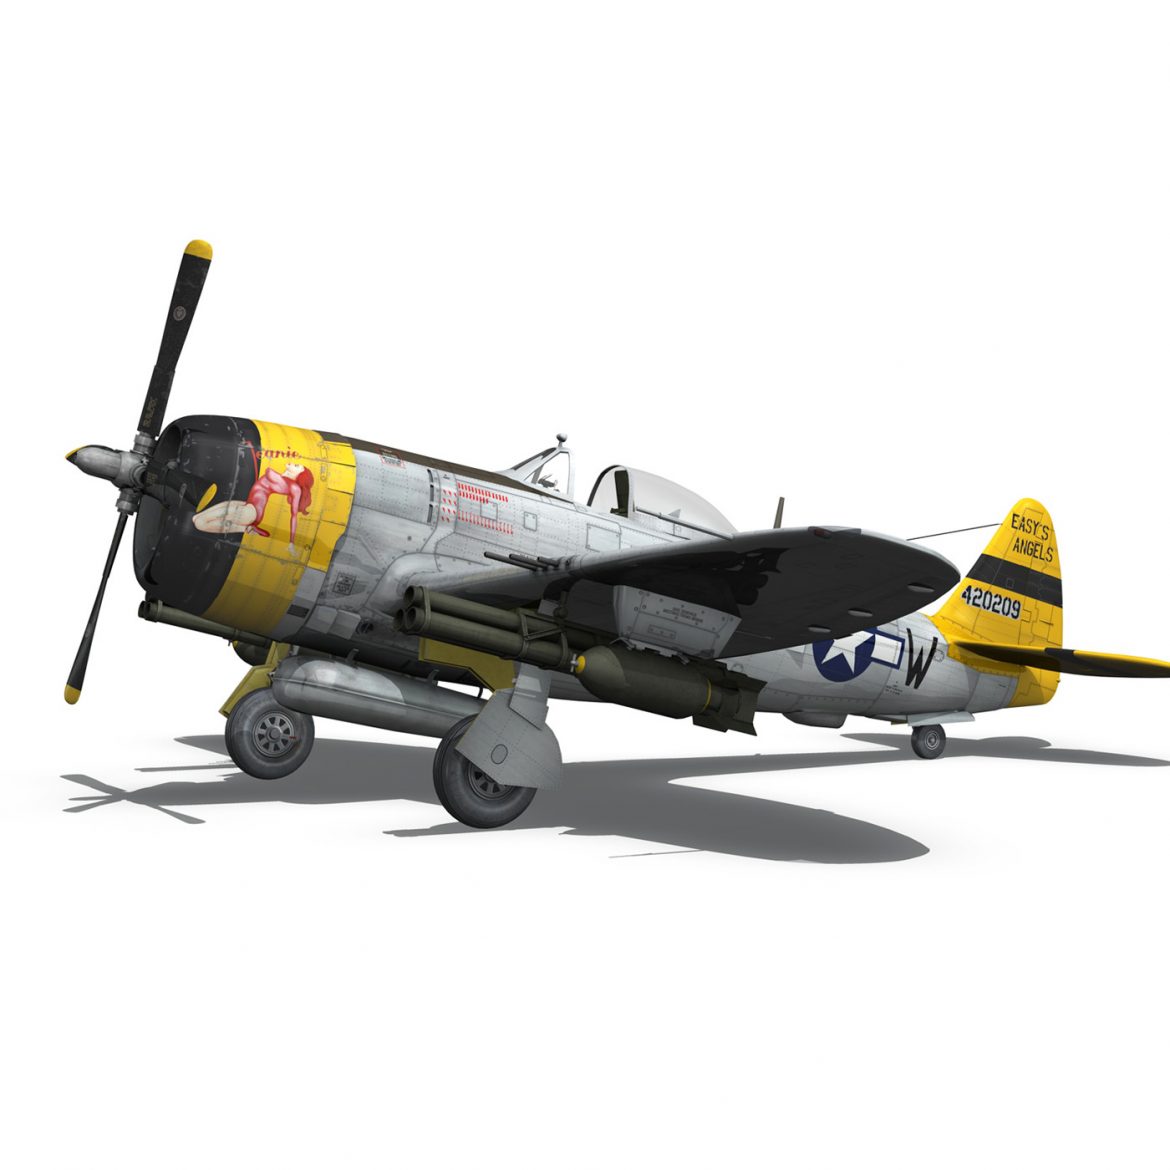 republic p-47d thunderbolt – eileen 3d model 3ds fbx c4d lwo obj 299942